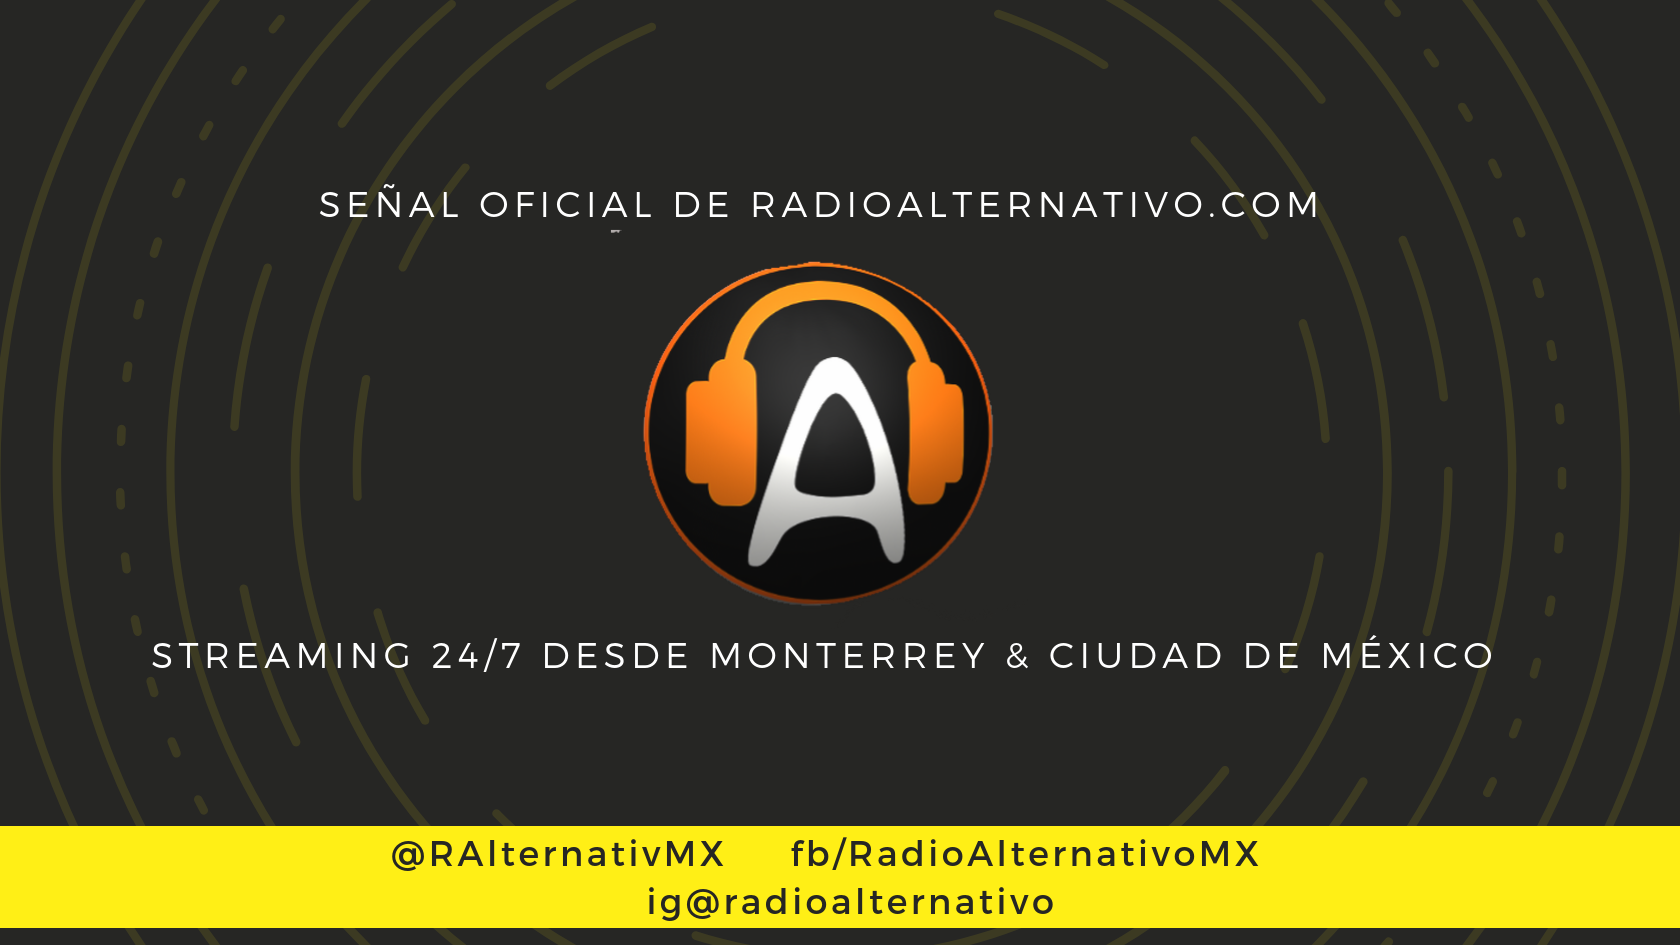 (c) Radioalternativo.com